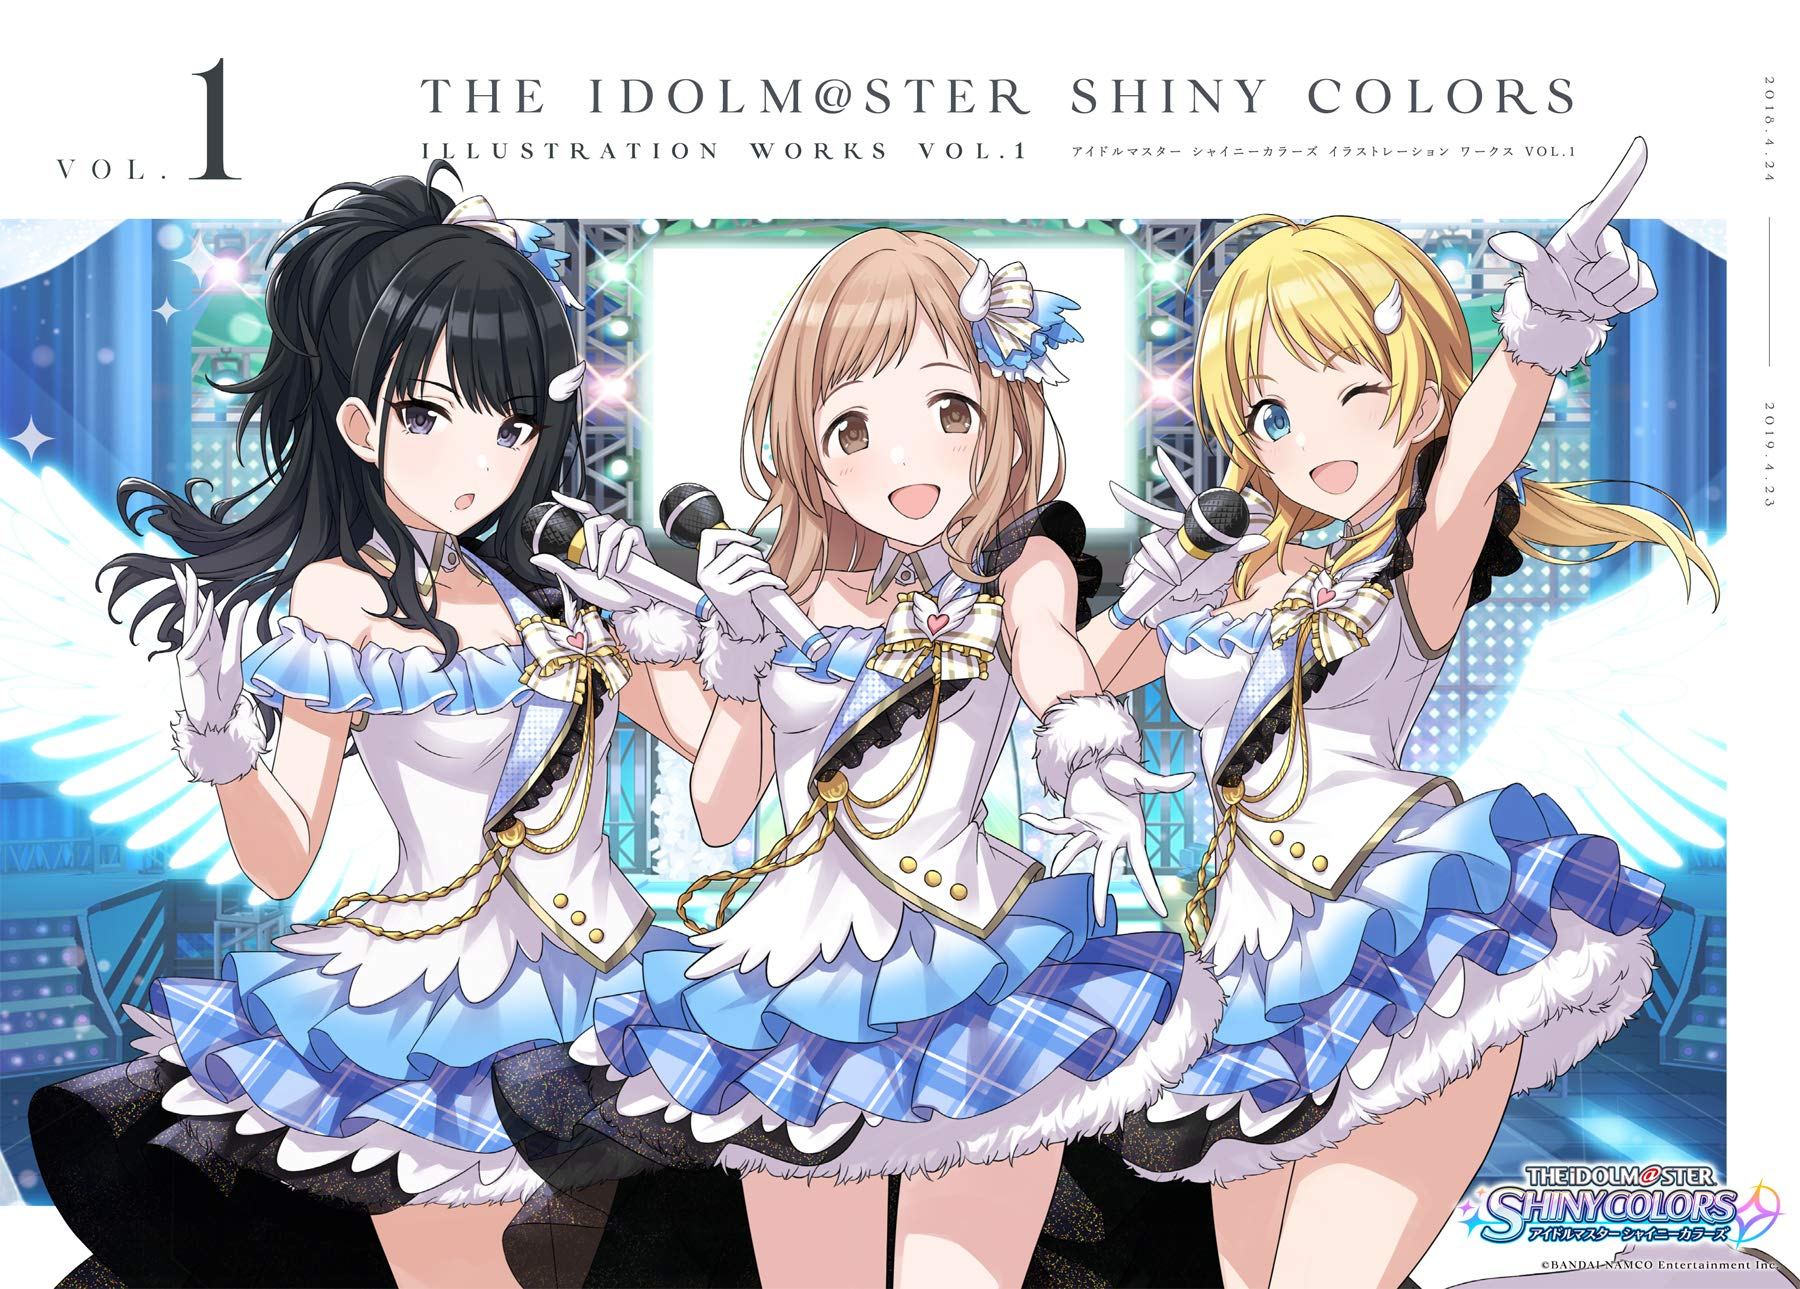 The Idolmaster Shiny Colors Illustration Works Vol.1